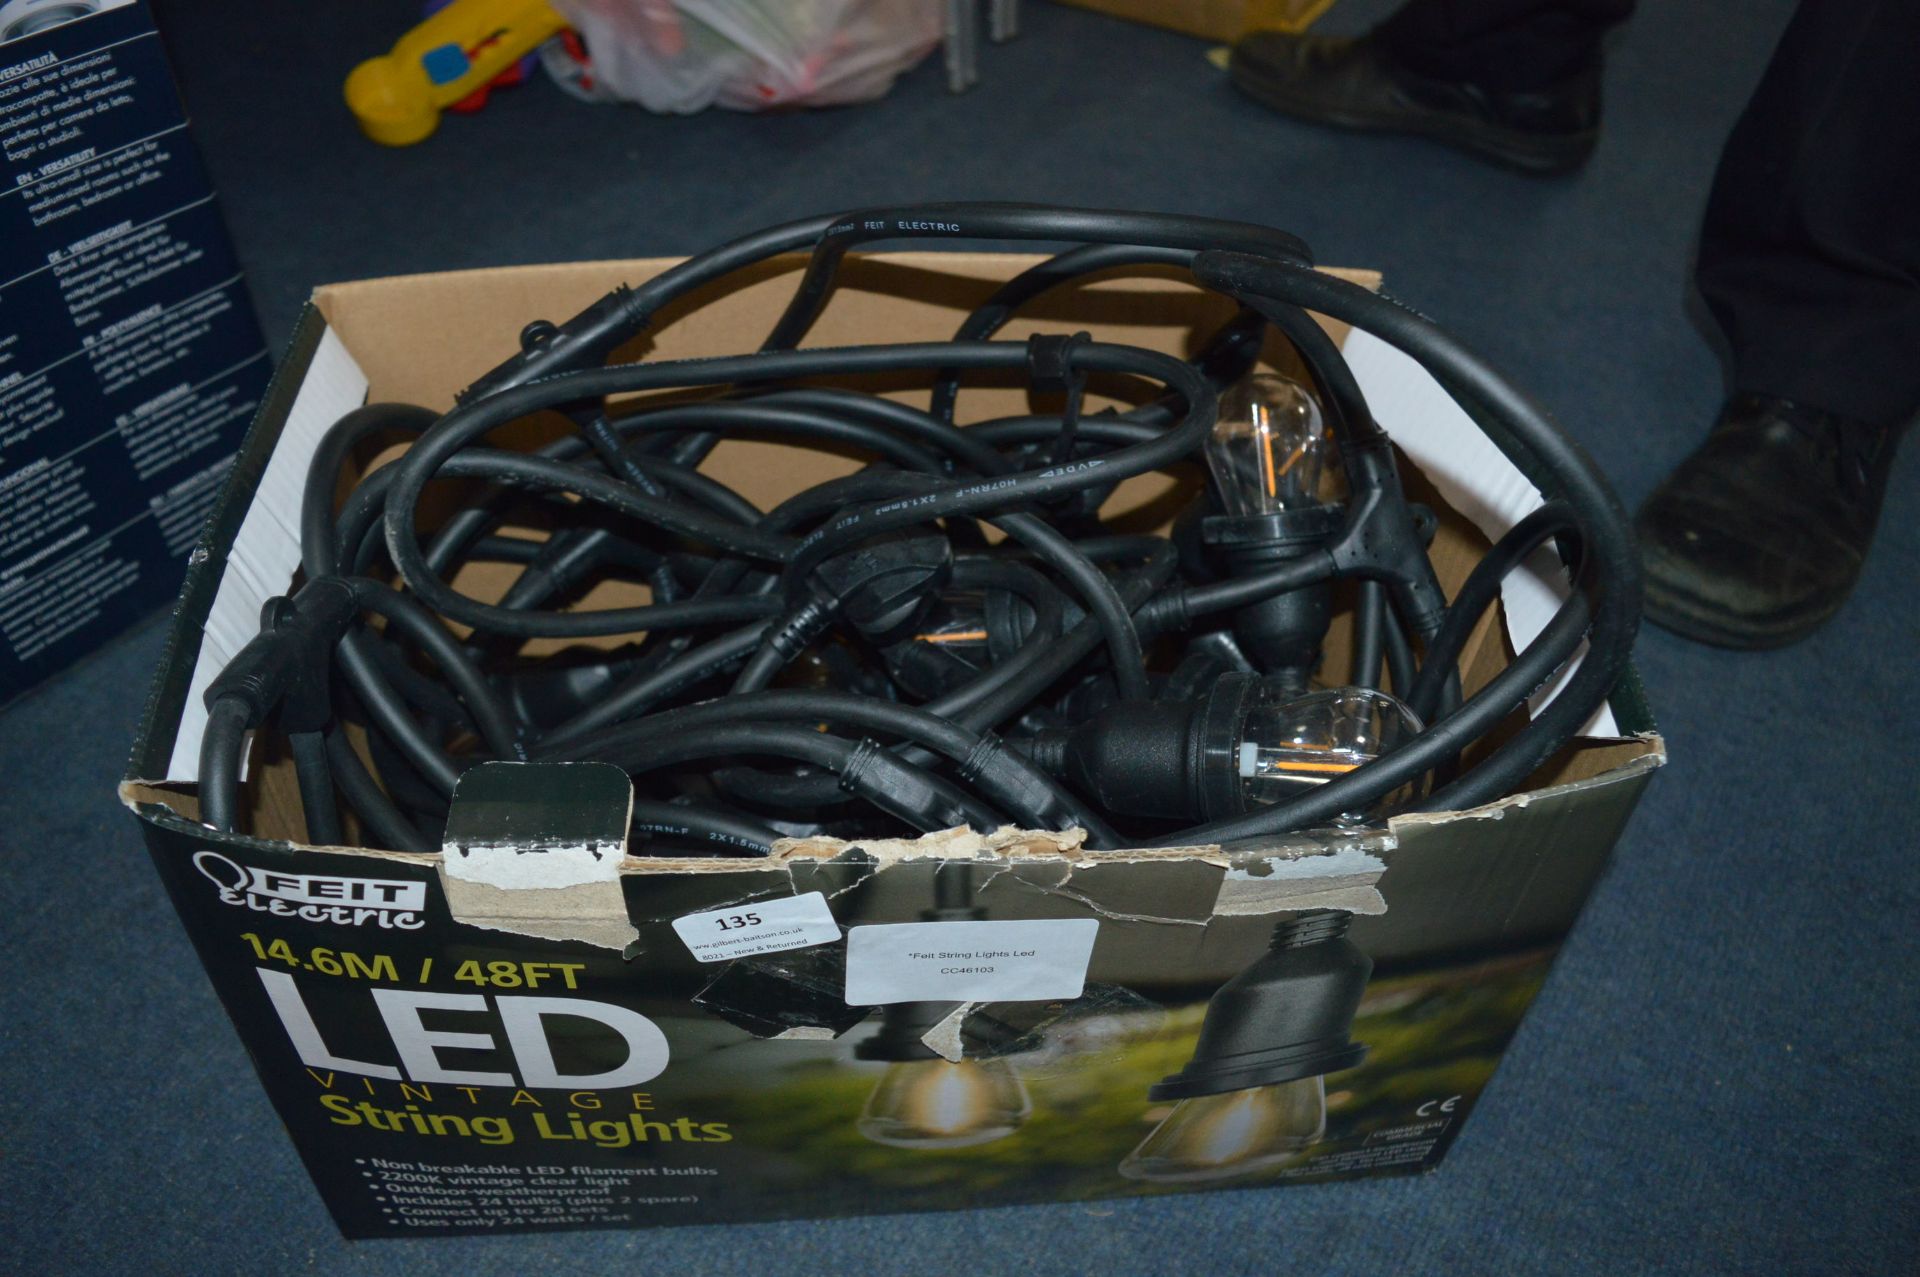 *Feit LED String Lights - Image 2 of 2